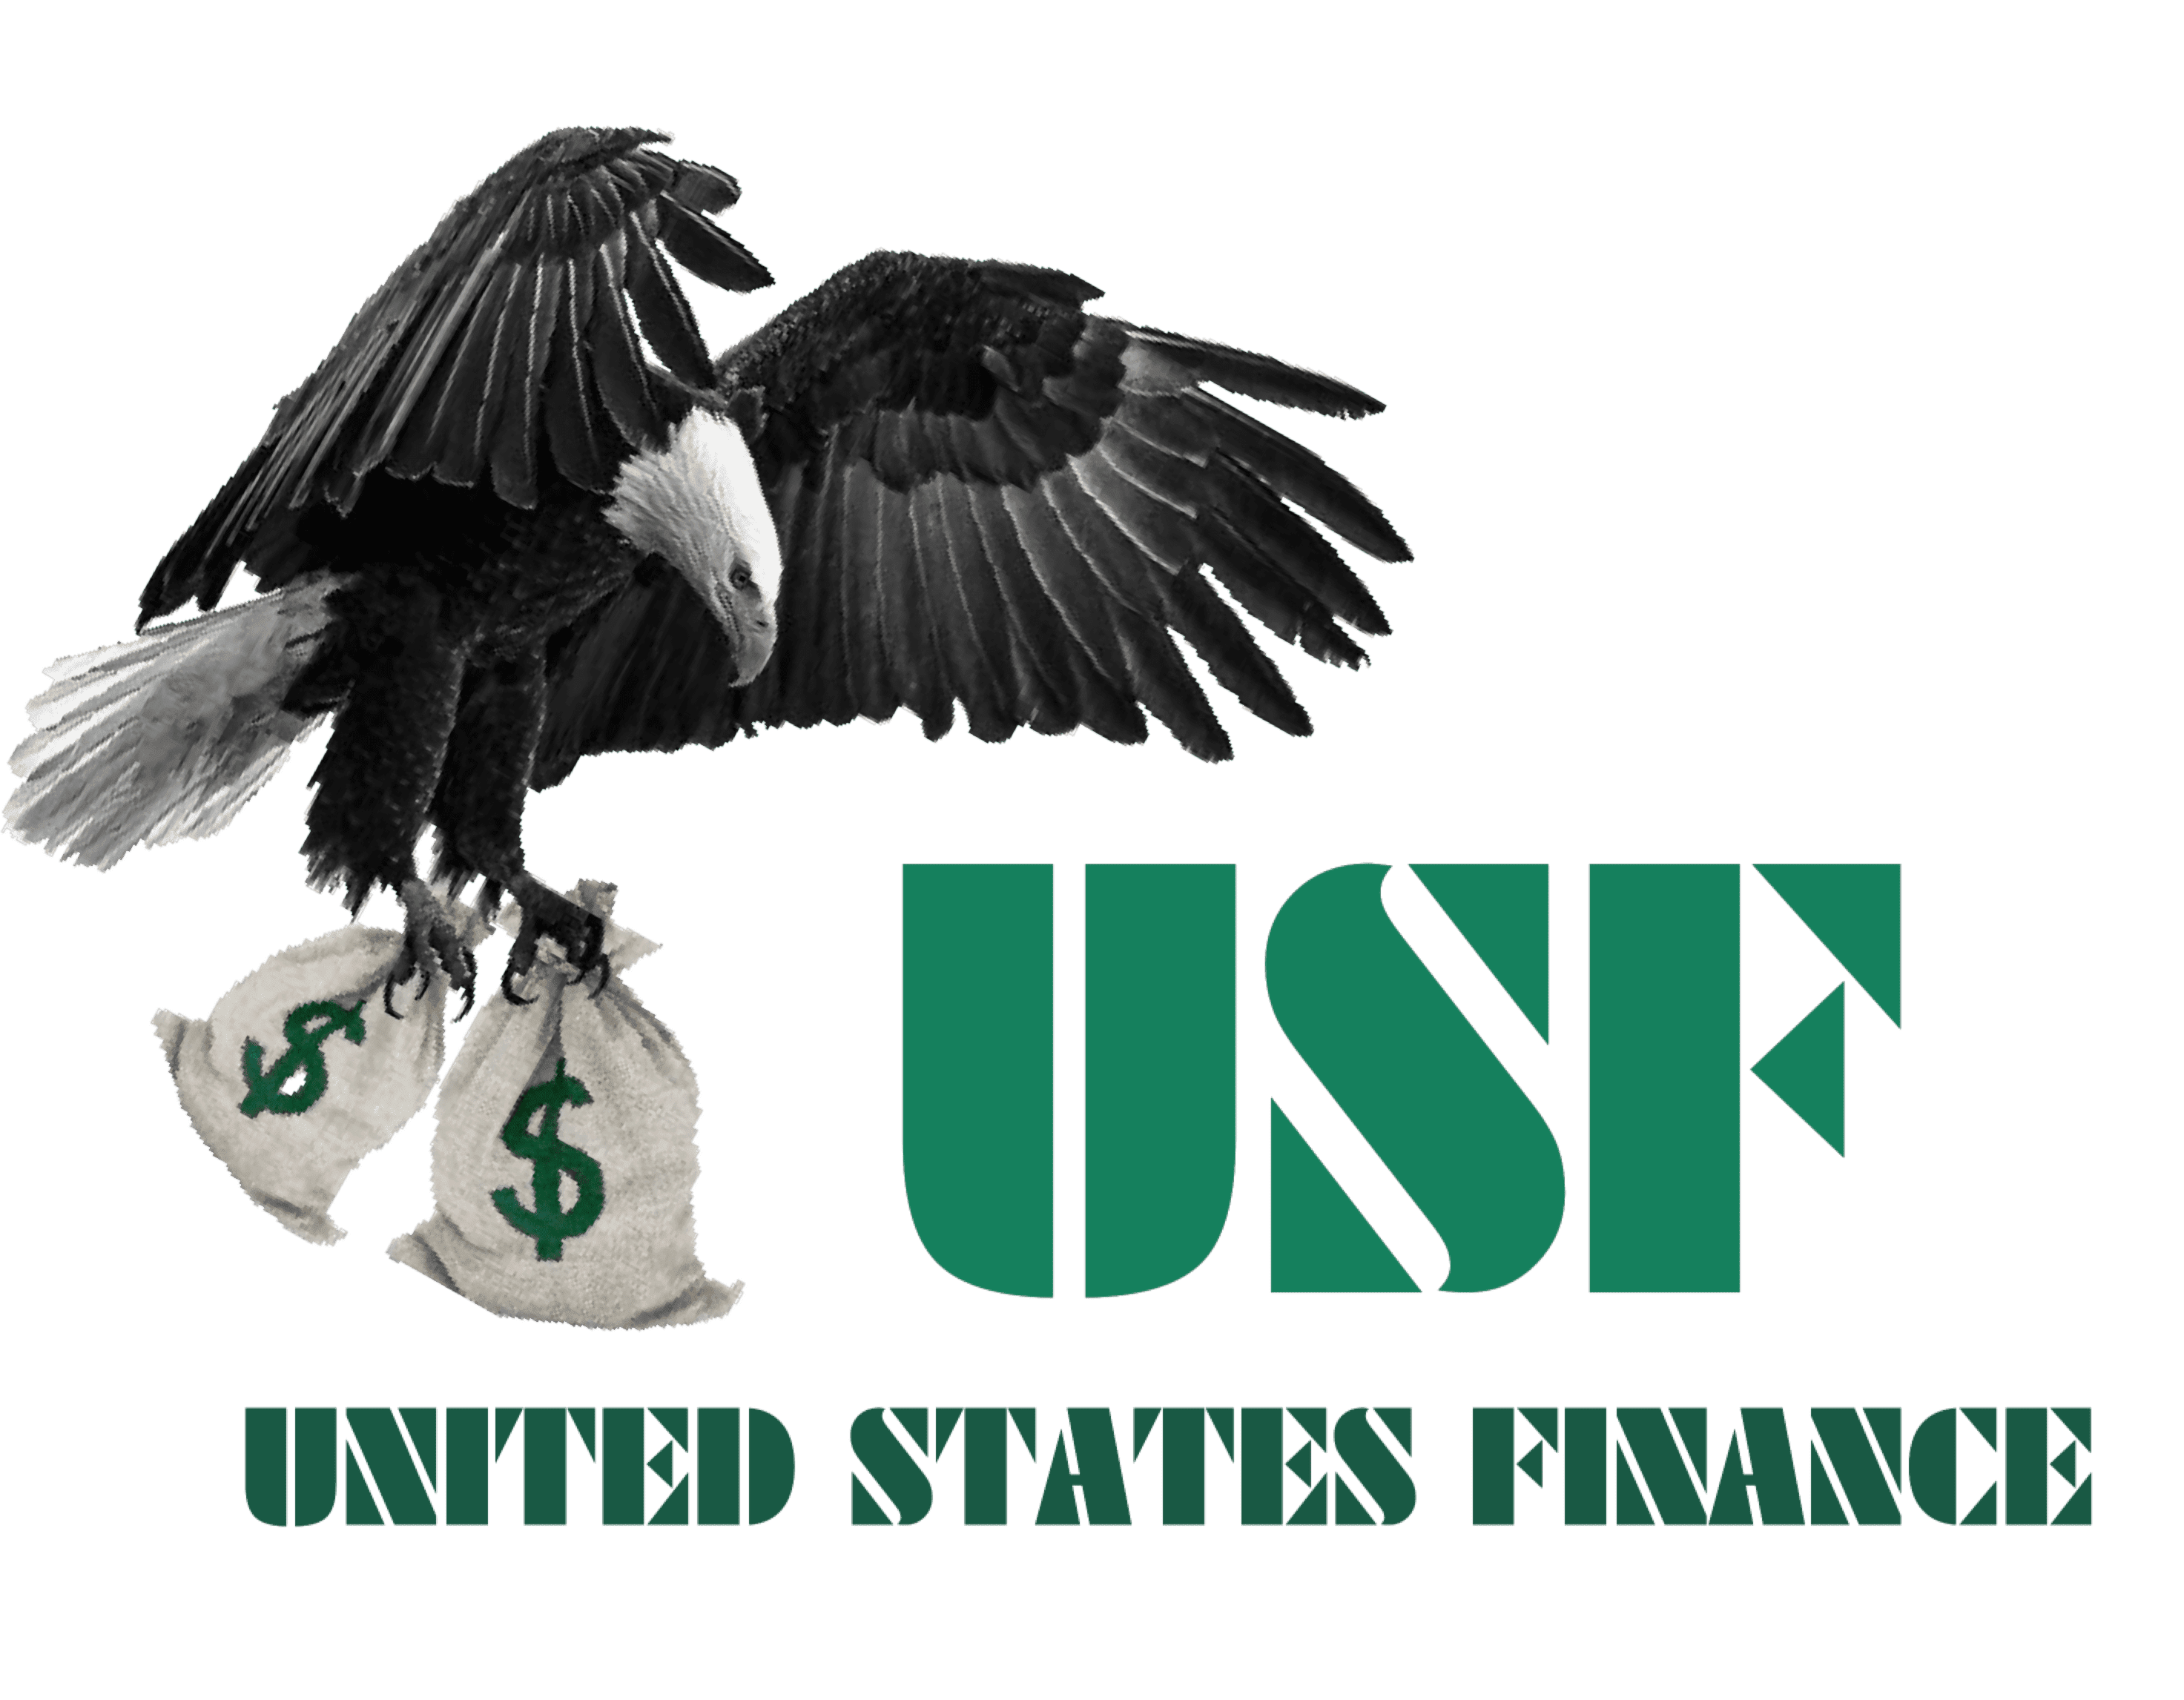 United States Finance